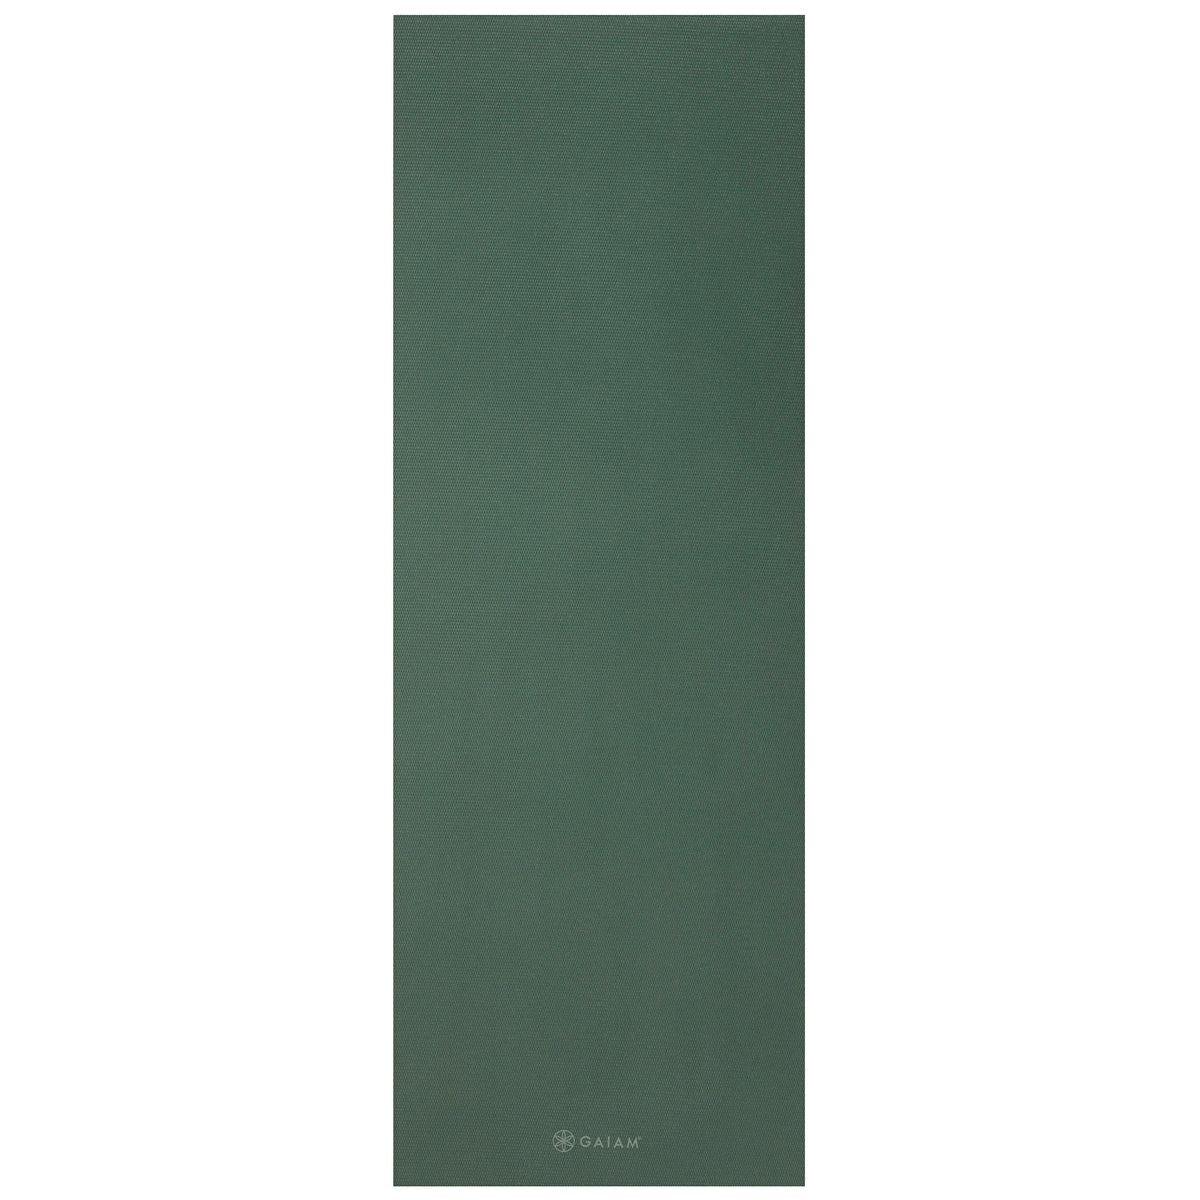 Gaiam Classic Solid Color Yoga Mats (5mm) Sagebrush flat